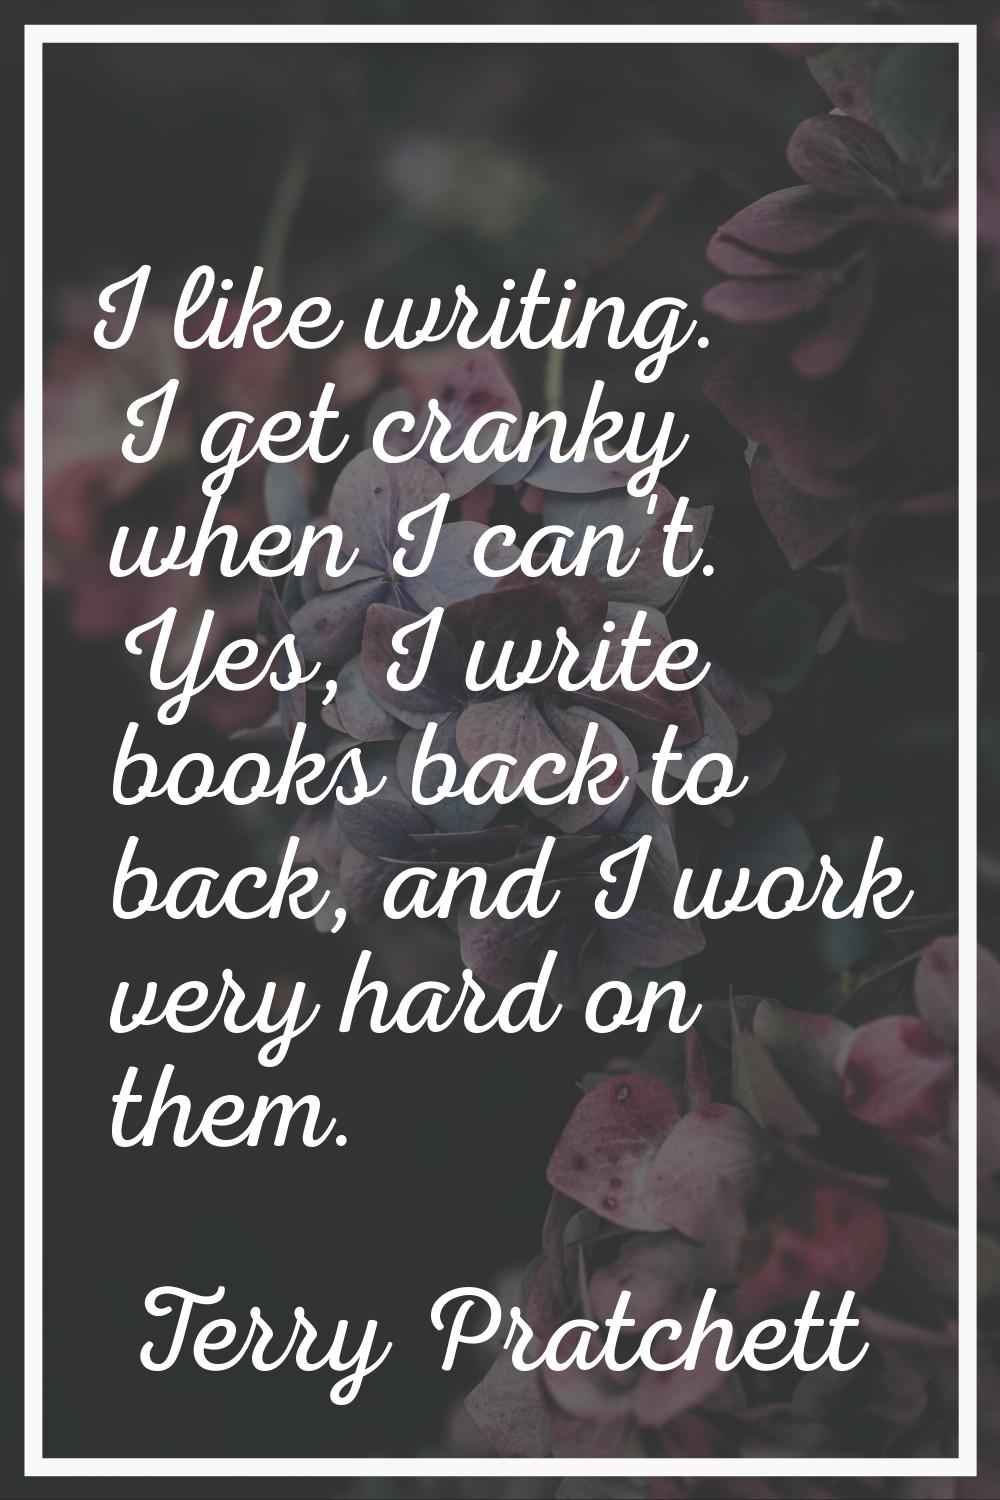 I like writing. I get cranky when I can't. Yes, I write books back to back, and I work very hard on